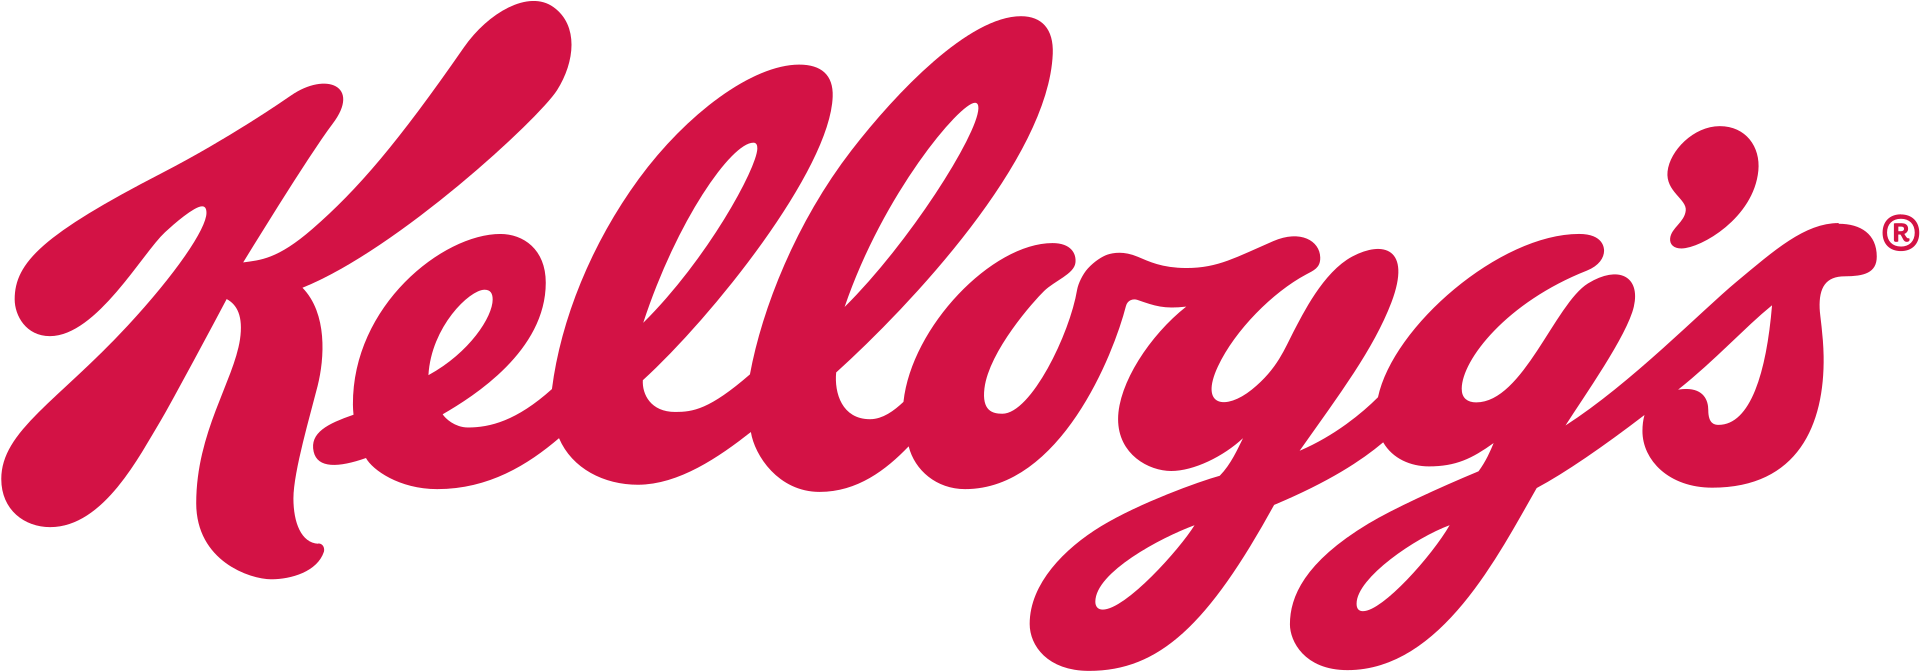 Kellogg's Brand Logo